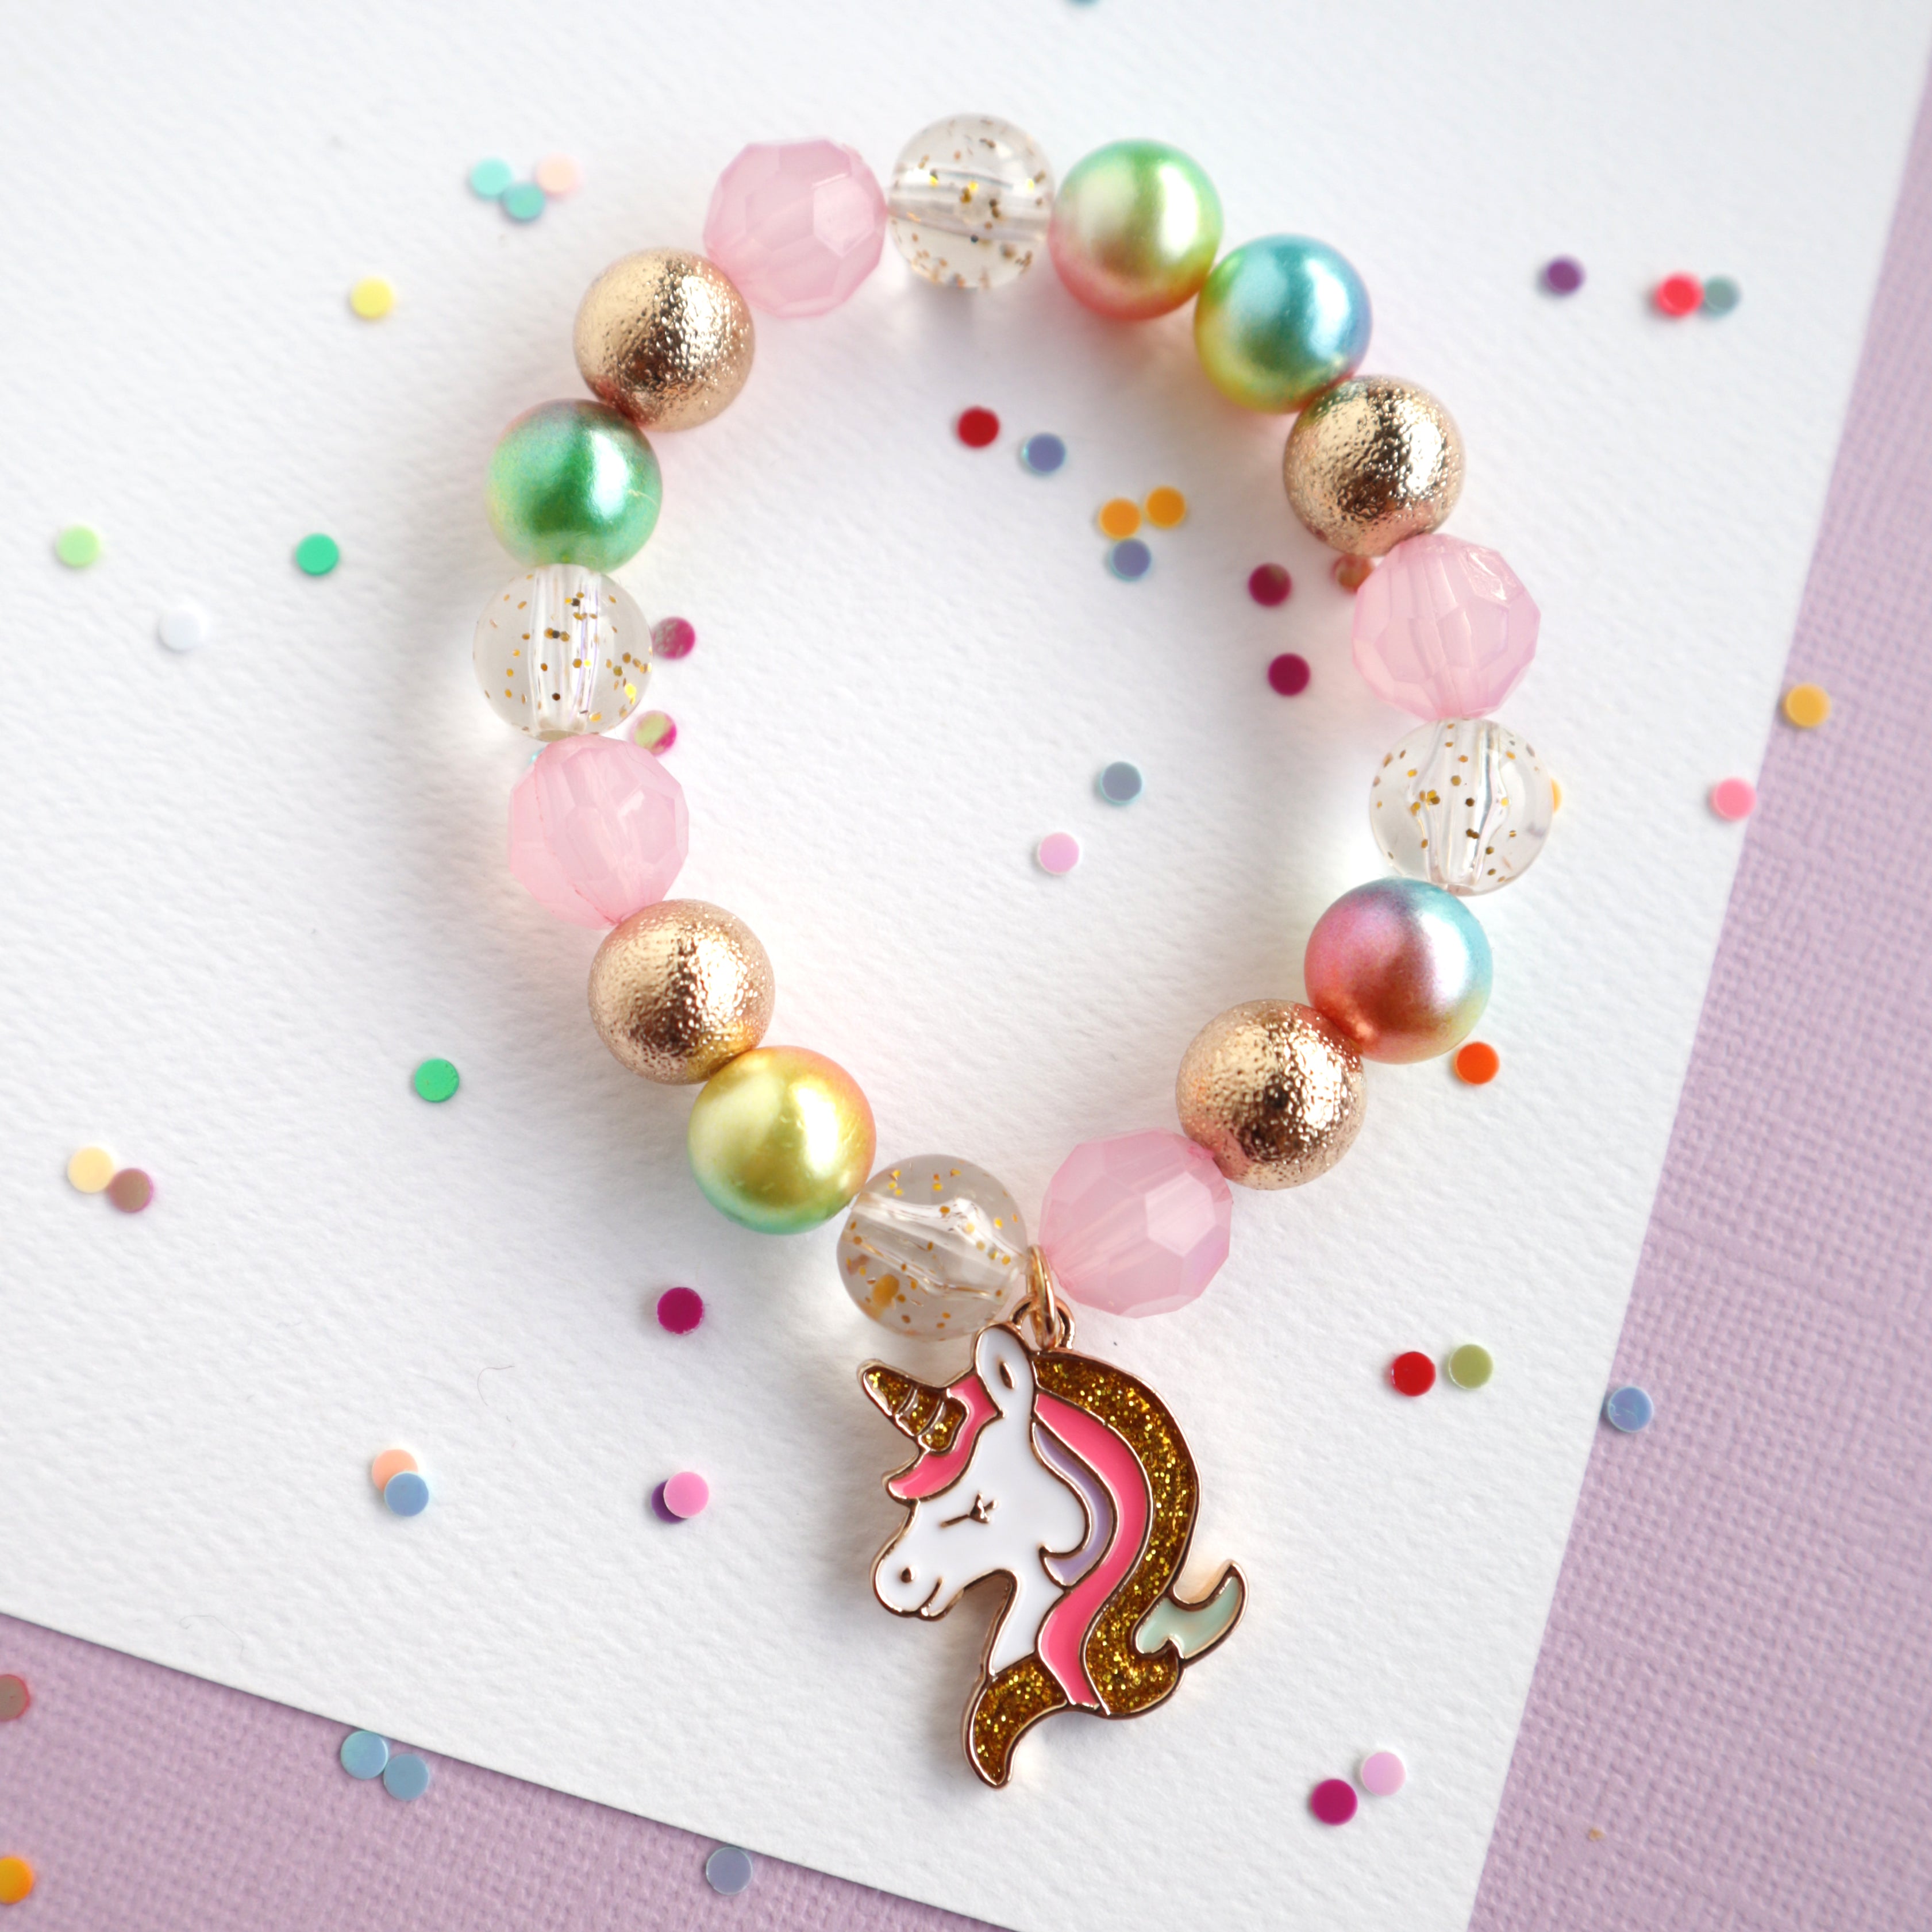 Mon Coco Mon Coco  Stretchy Bracelet - Unicorn Shimmer